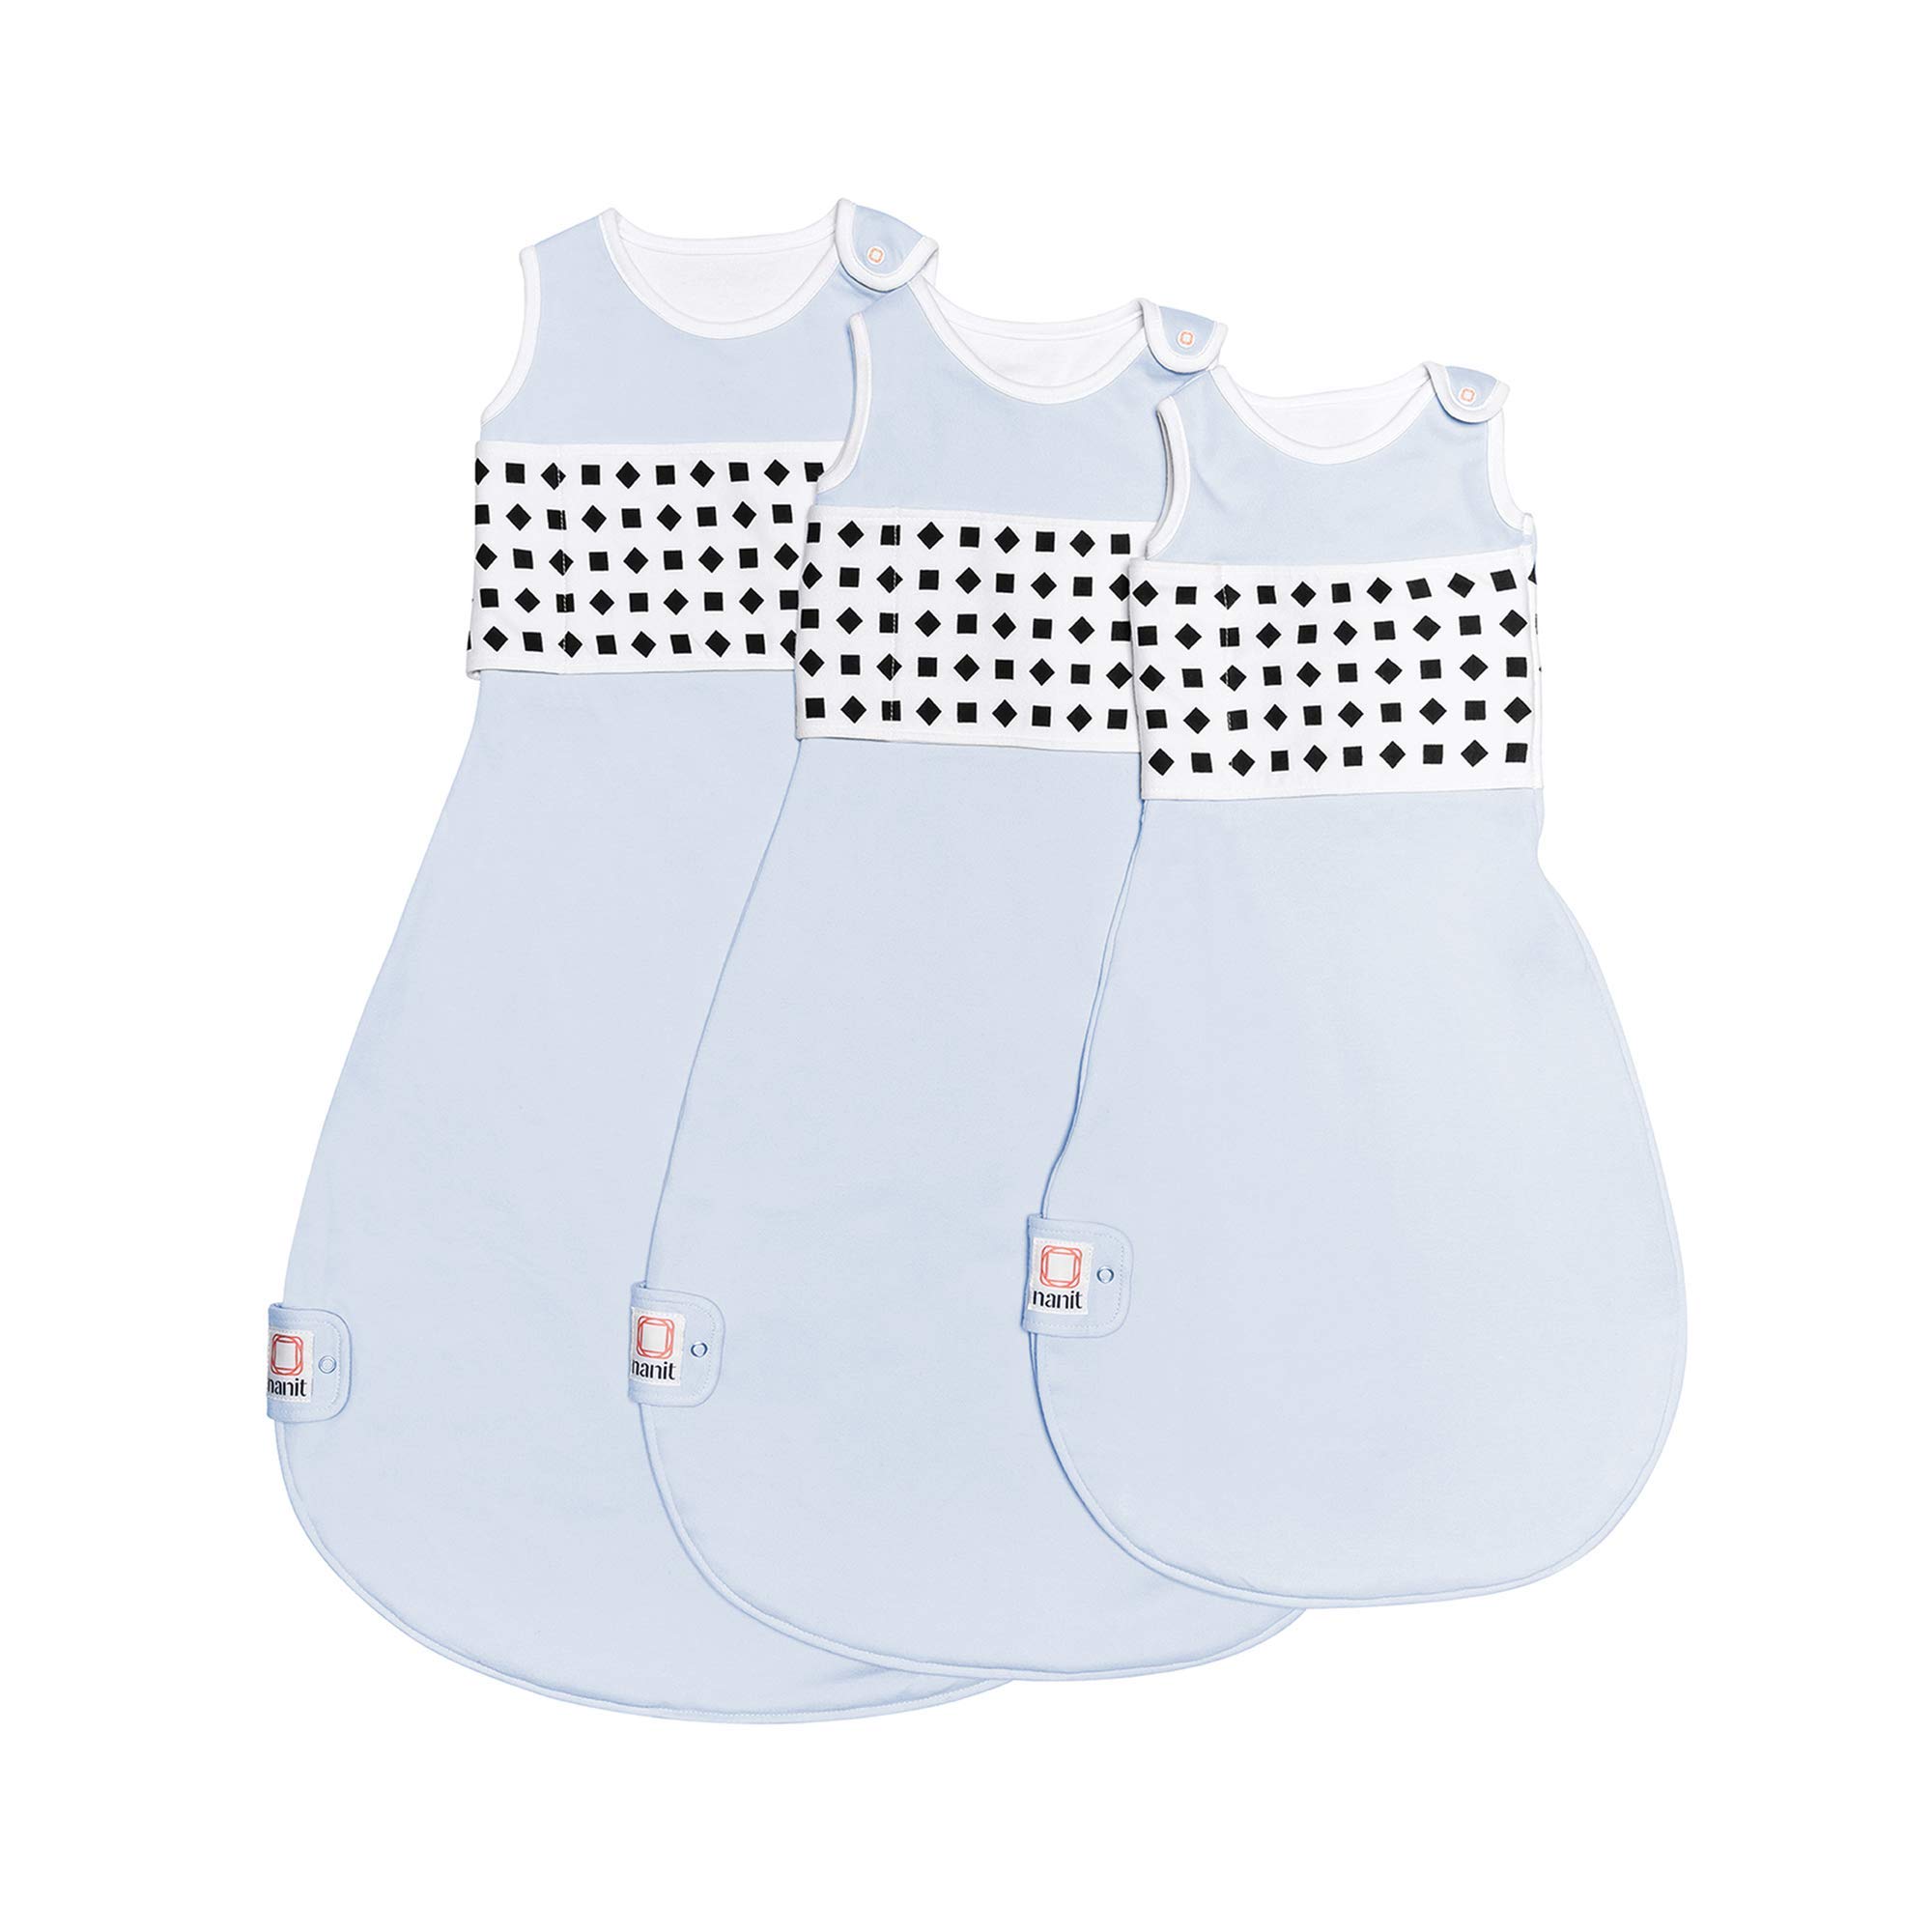 Nanit Breathing Wear Sleeping Bag – 100% Cotton Baby Sleep Sack - Works with Nanit Pro Baby Monitor to Track Breathing Motion Sensor-Free, Real-Time Alerts, Size Medium, 6-12 Months, Powder Blue